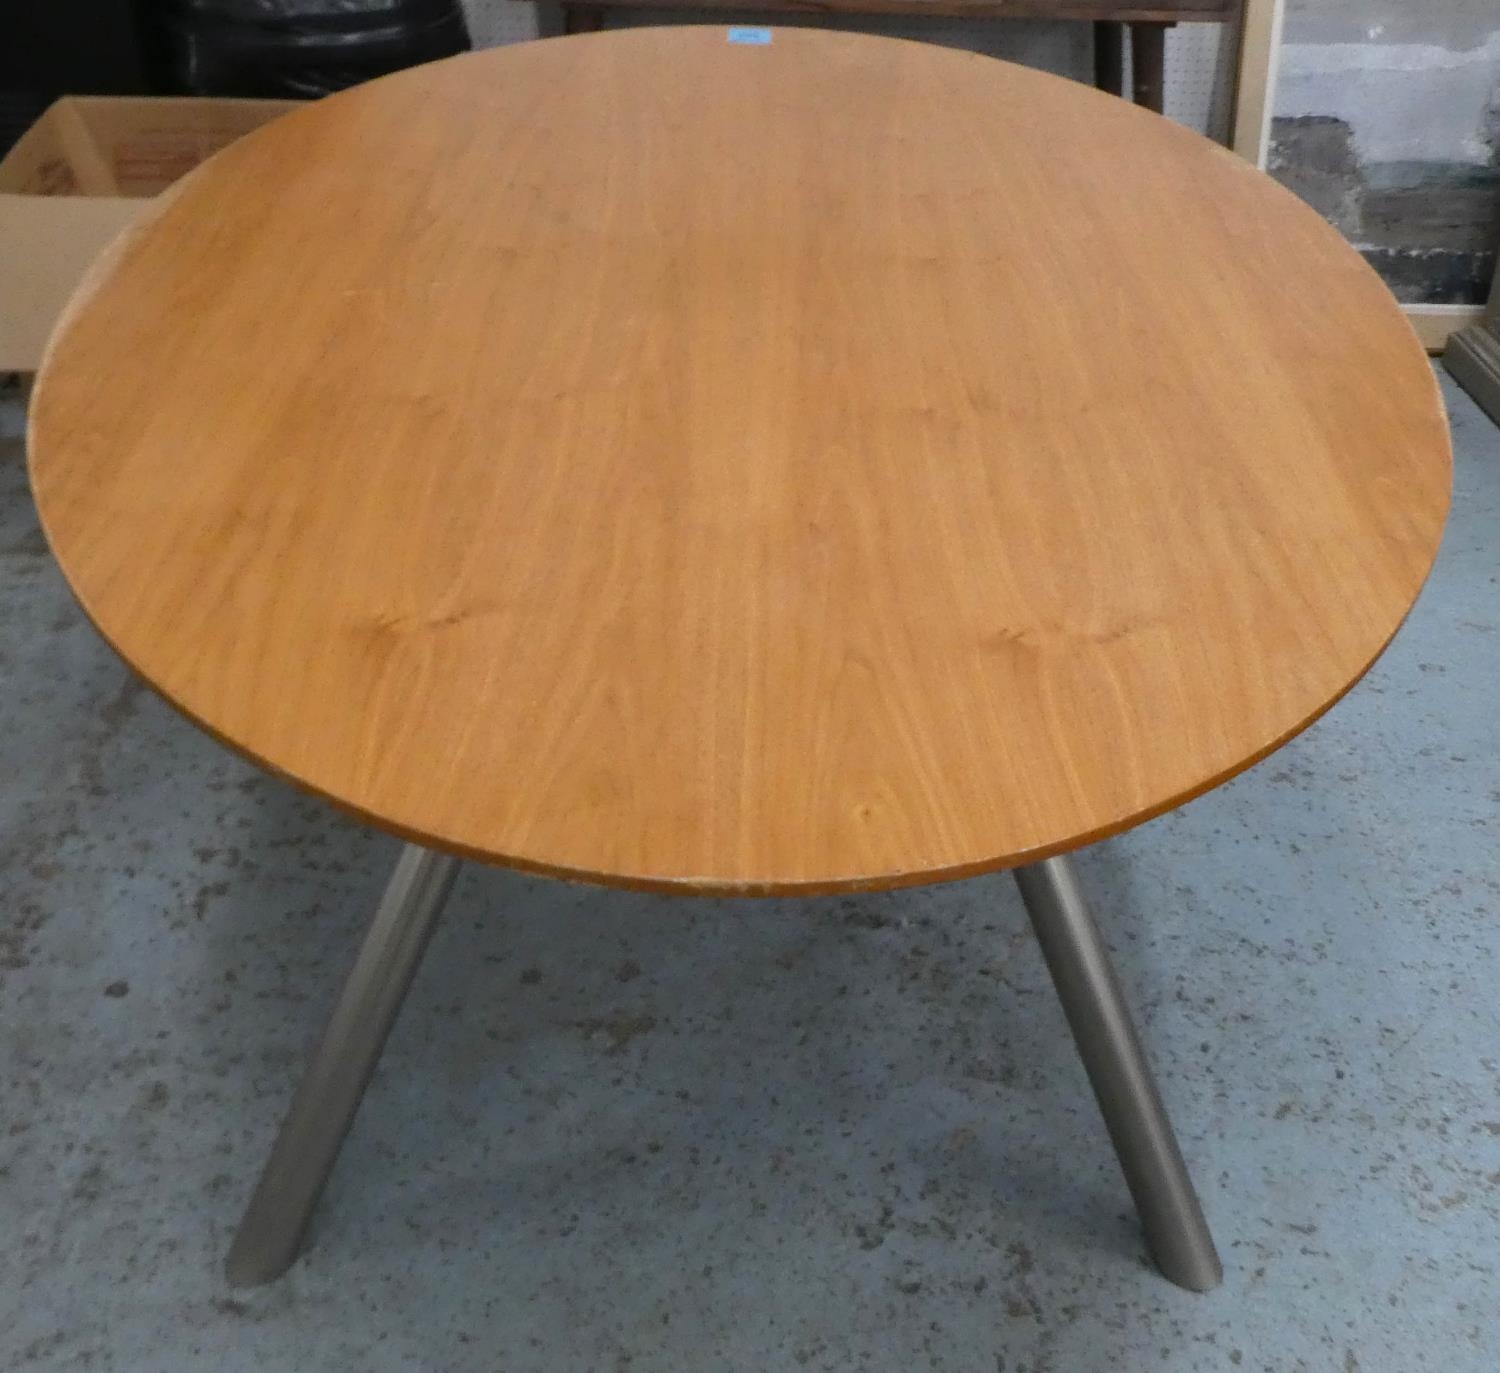 DINING TABLE, contemporary design, 175cm x 110cm x 75cm. - Image 2 of 6